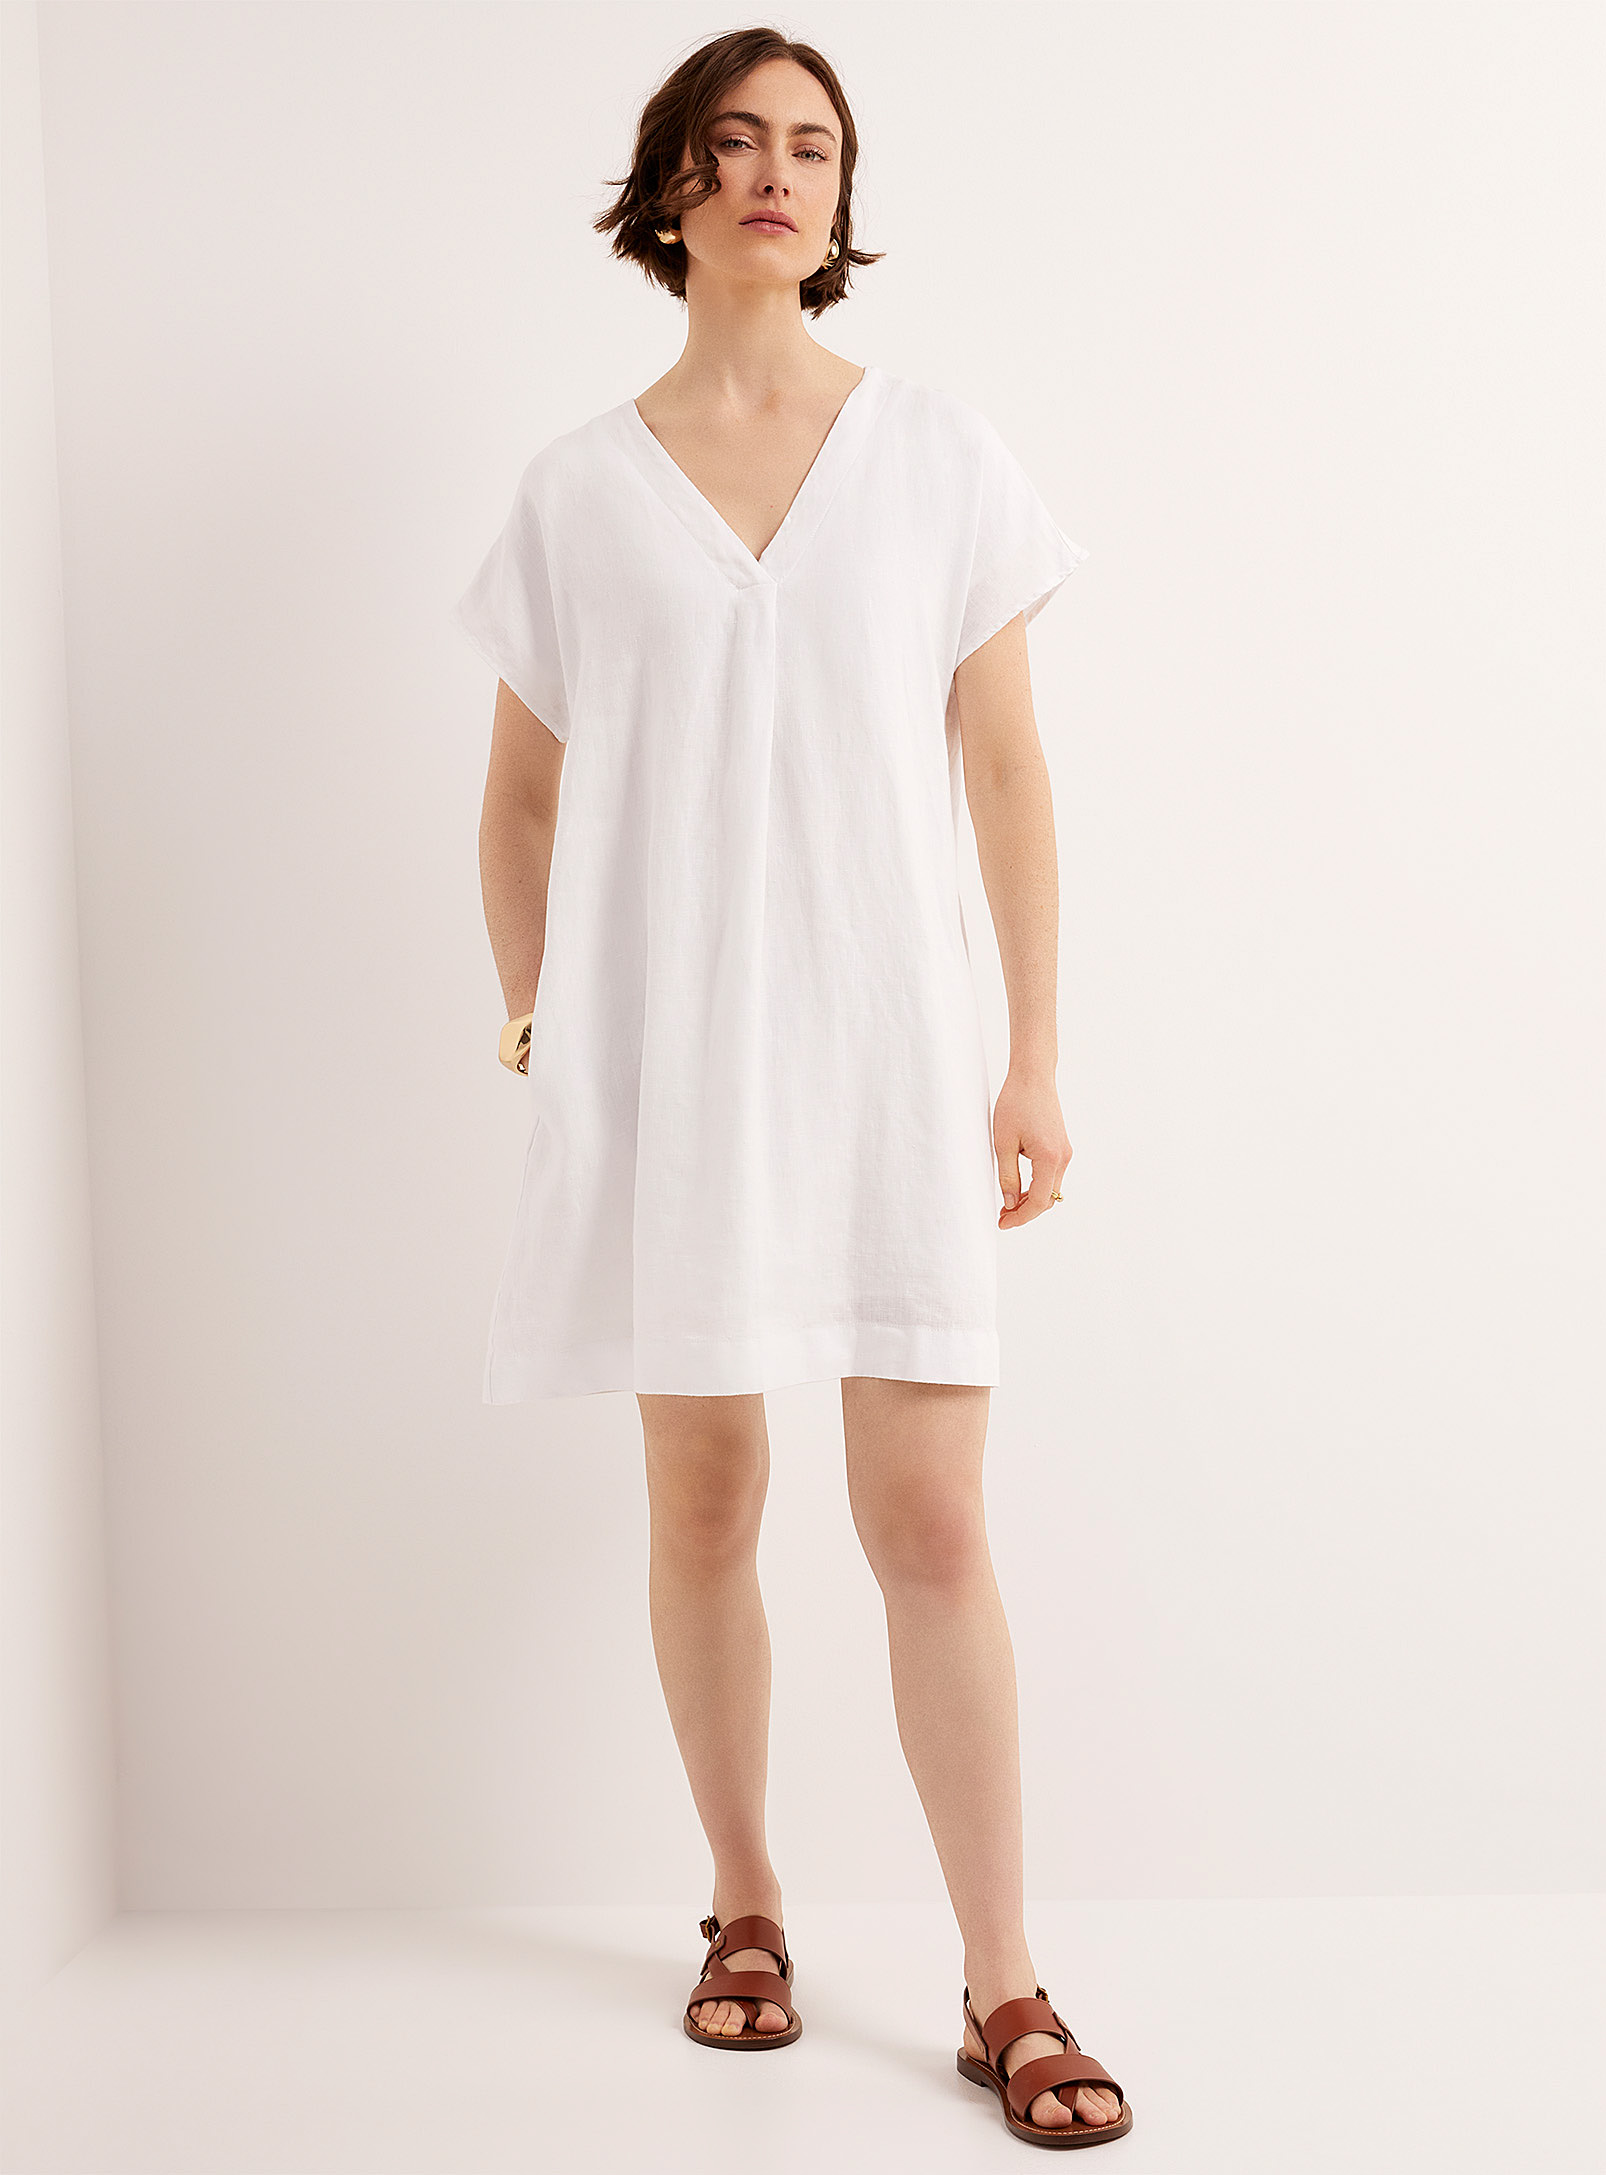 Contemporaine - Women's Pleated V-neck organic linen dress